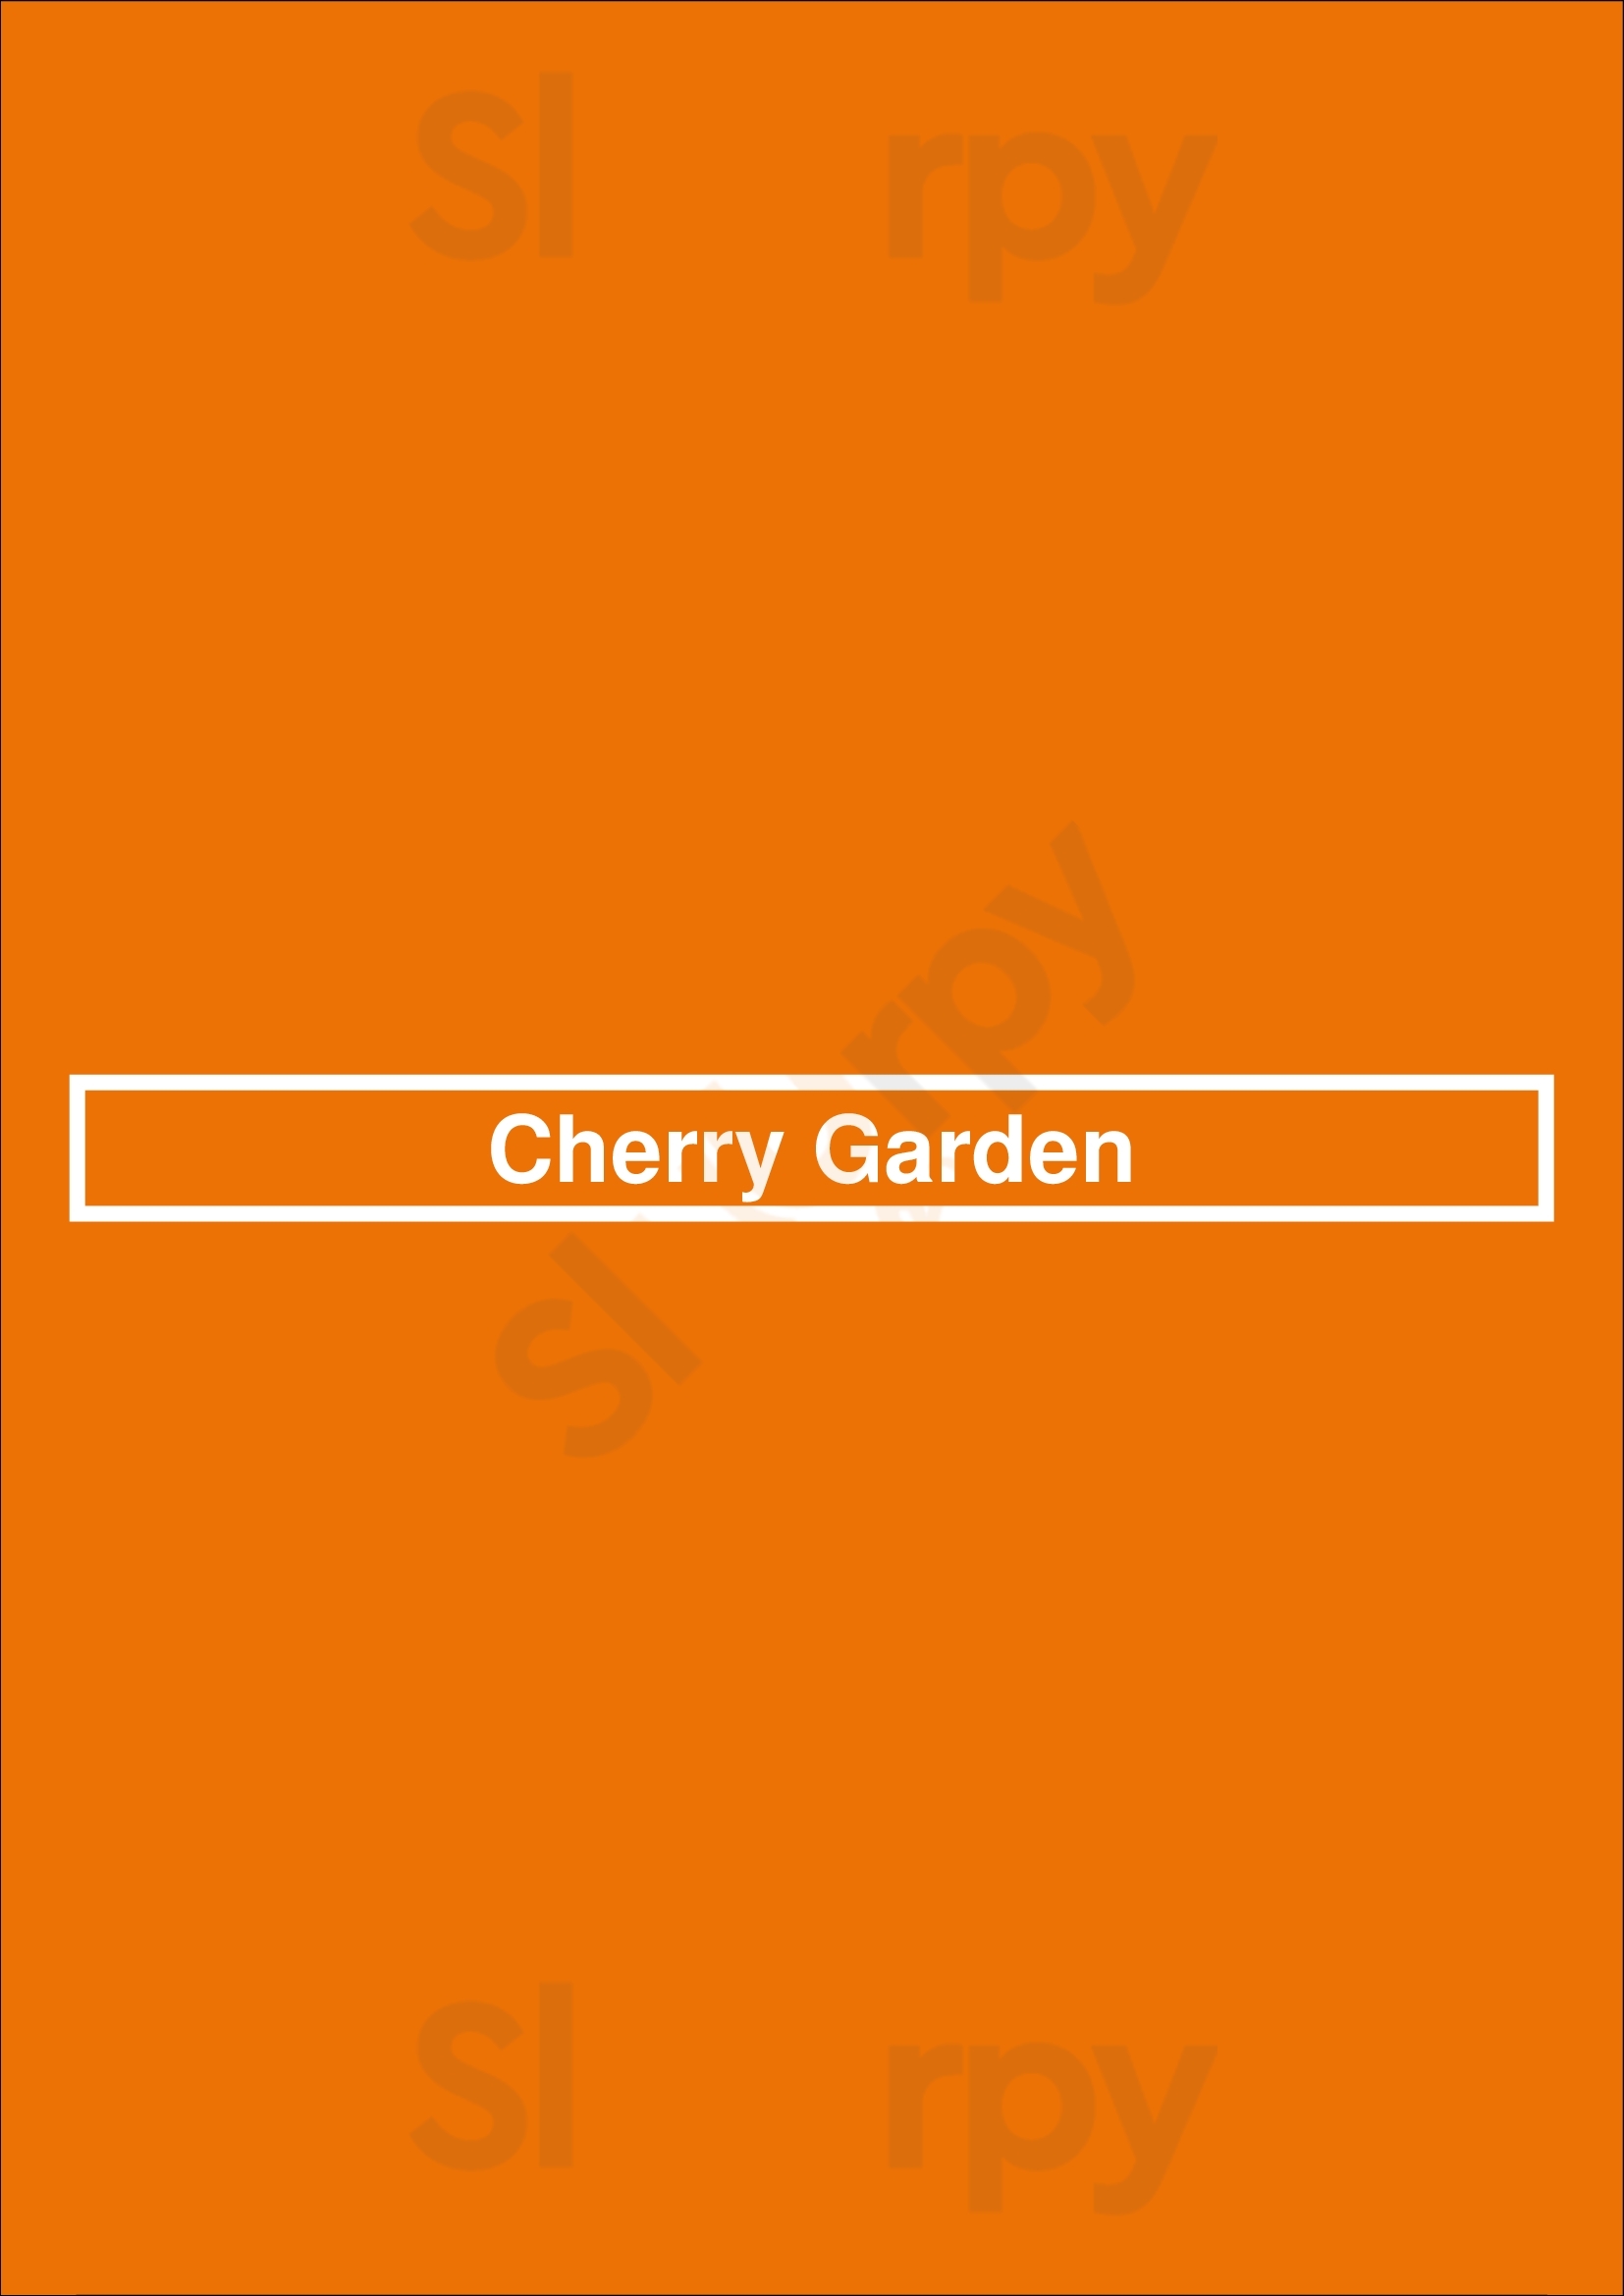 Cherry Garden Singapore Menu - 1